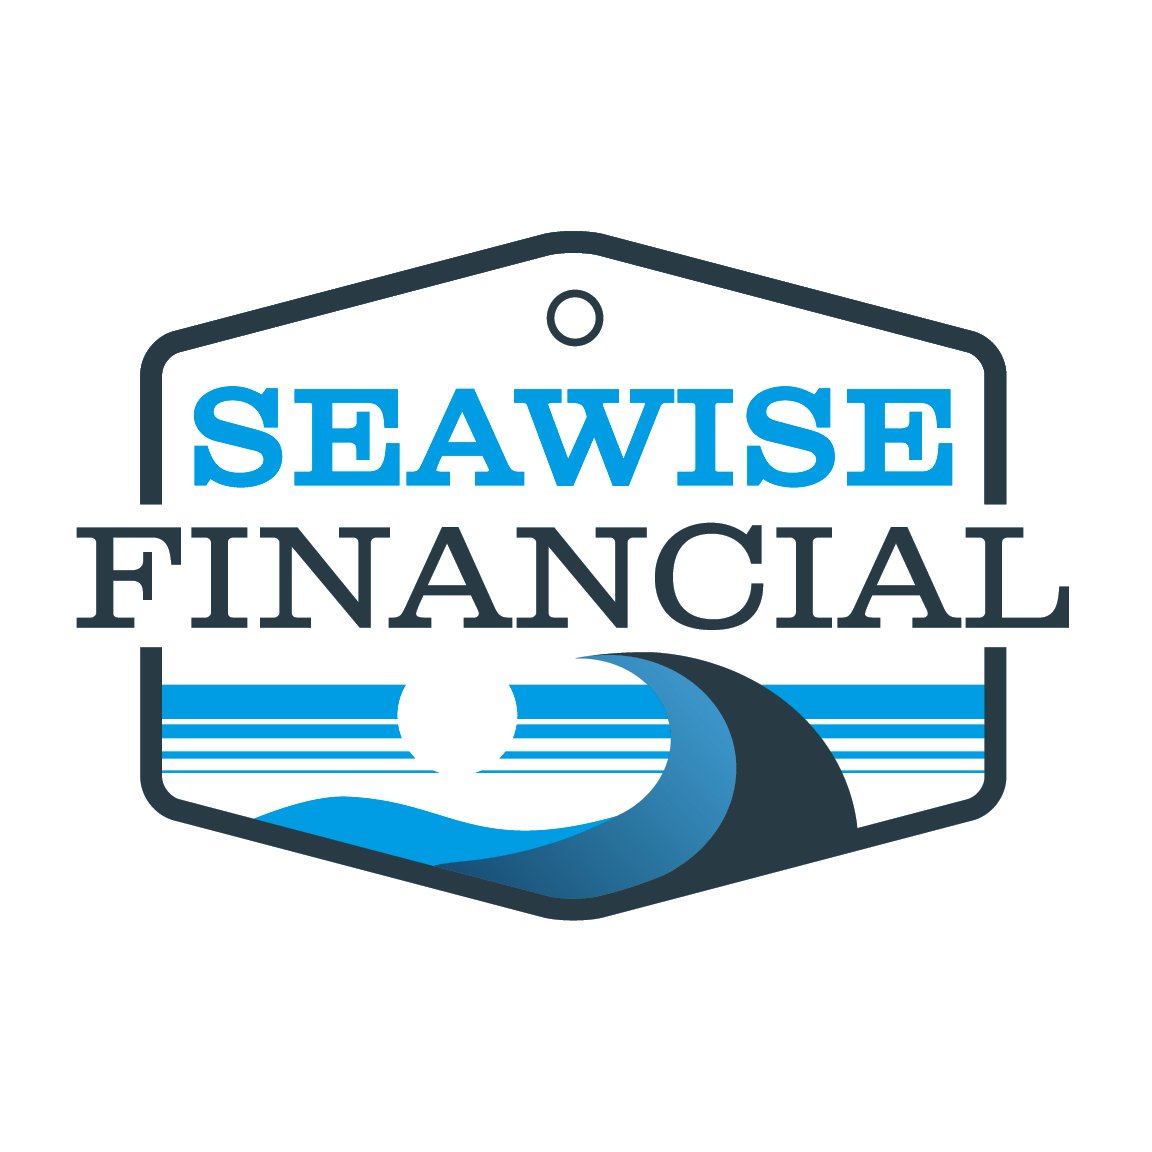 Seawise Financial.jpg